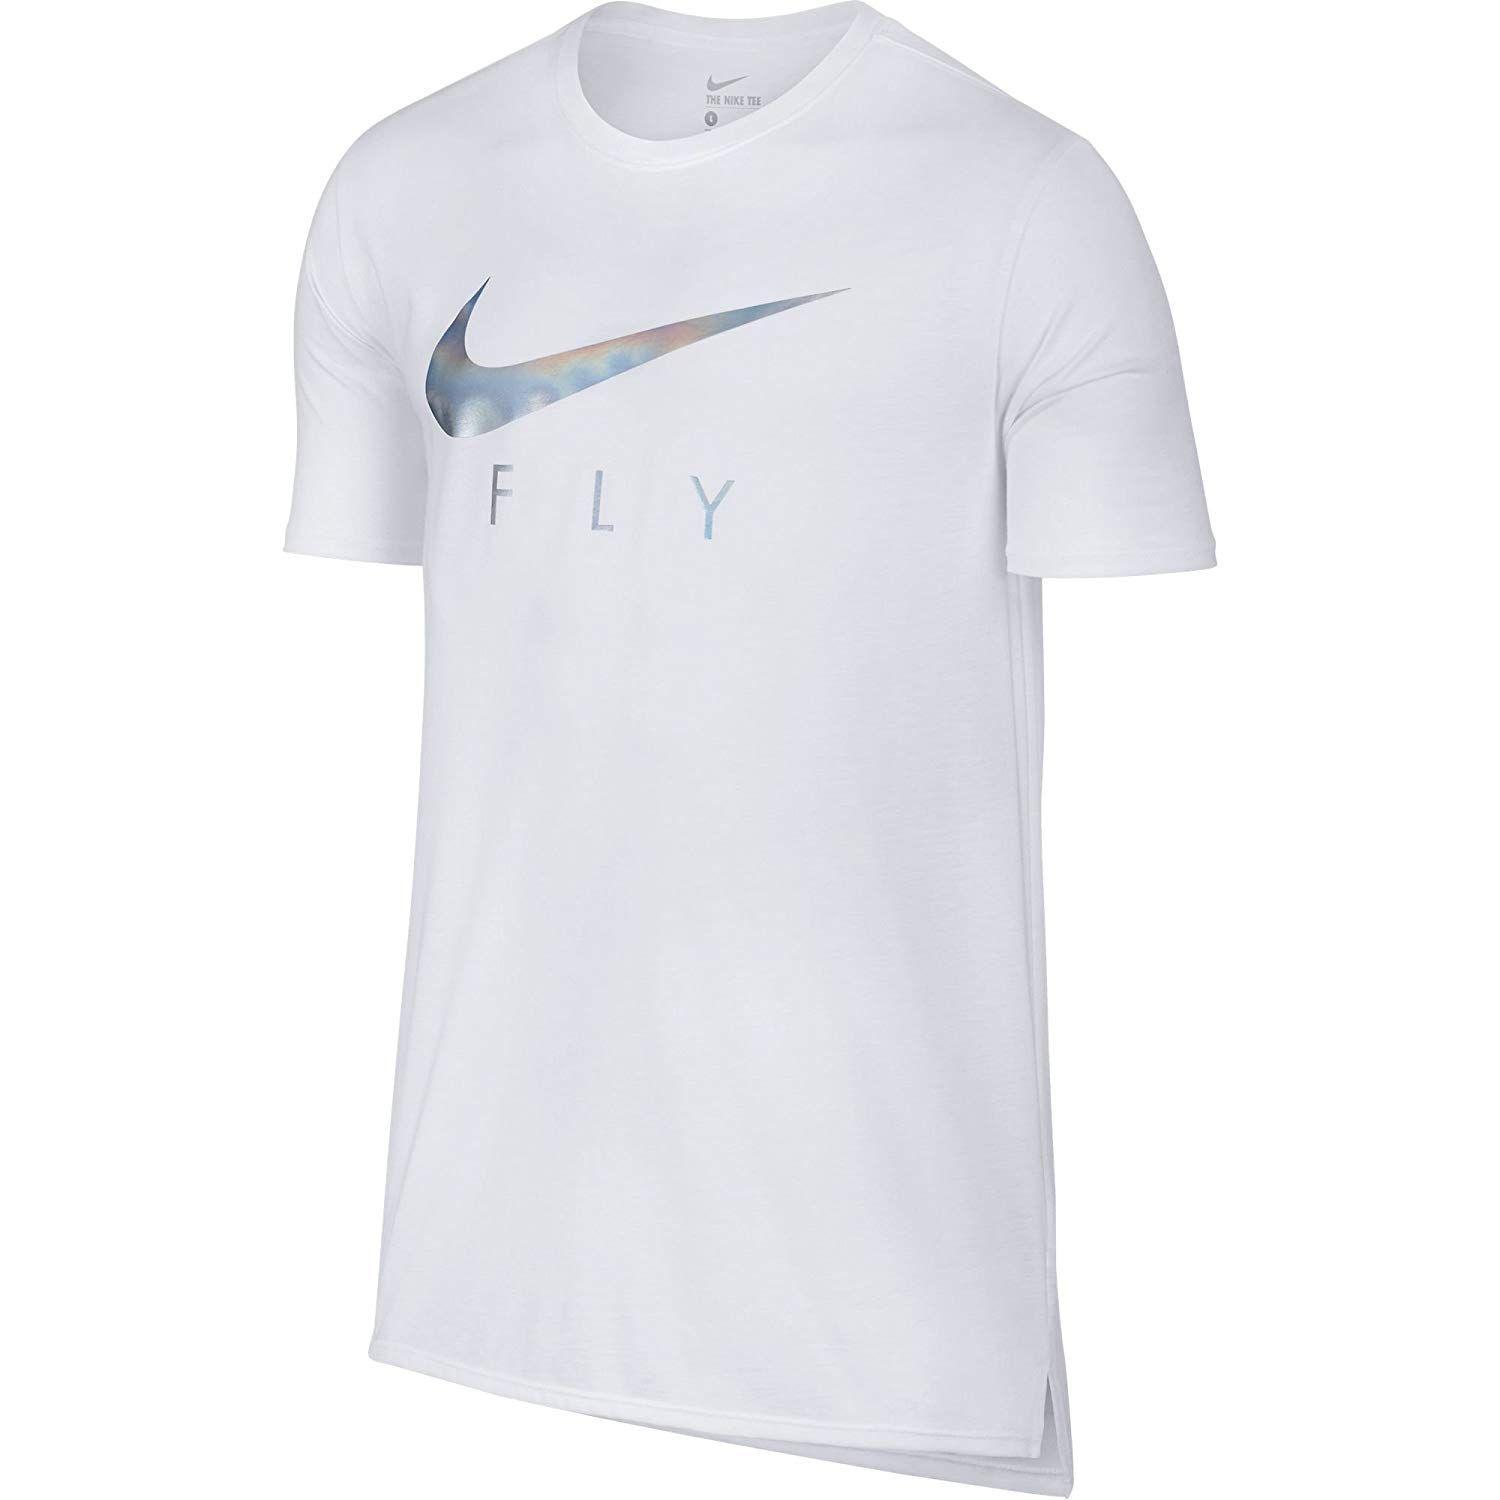 Silver Nike Logo - Amazon.com: Nike Swoosh Logo Printed Fly Drop Tail Men's T-Shirt ...